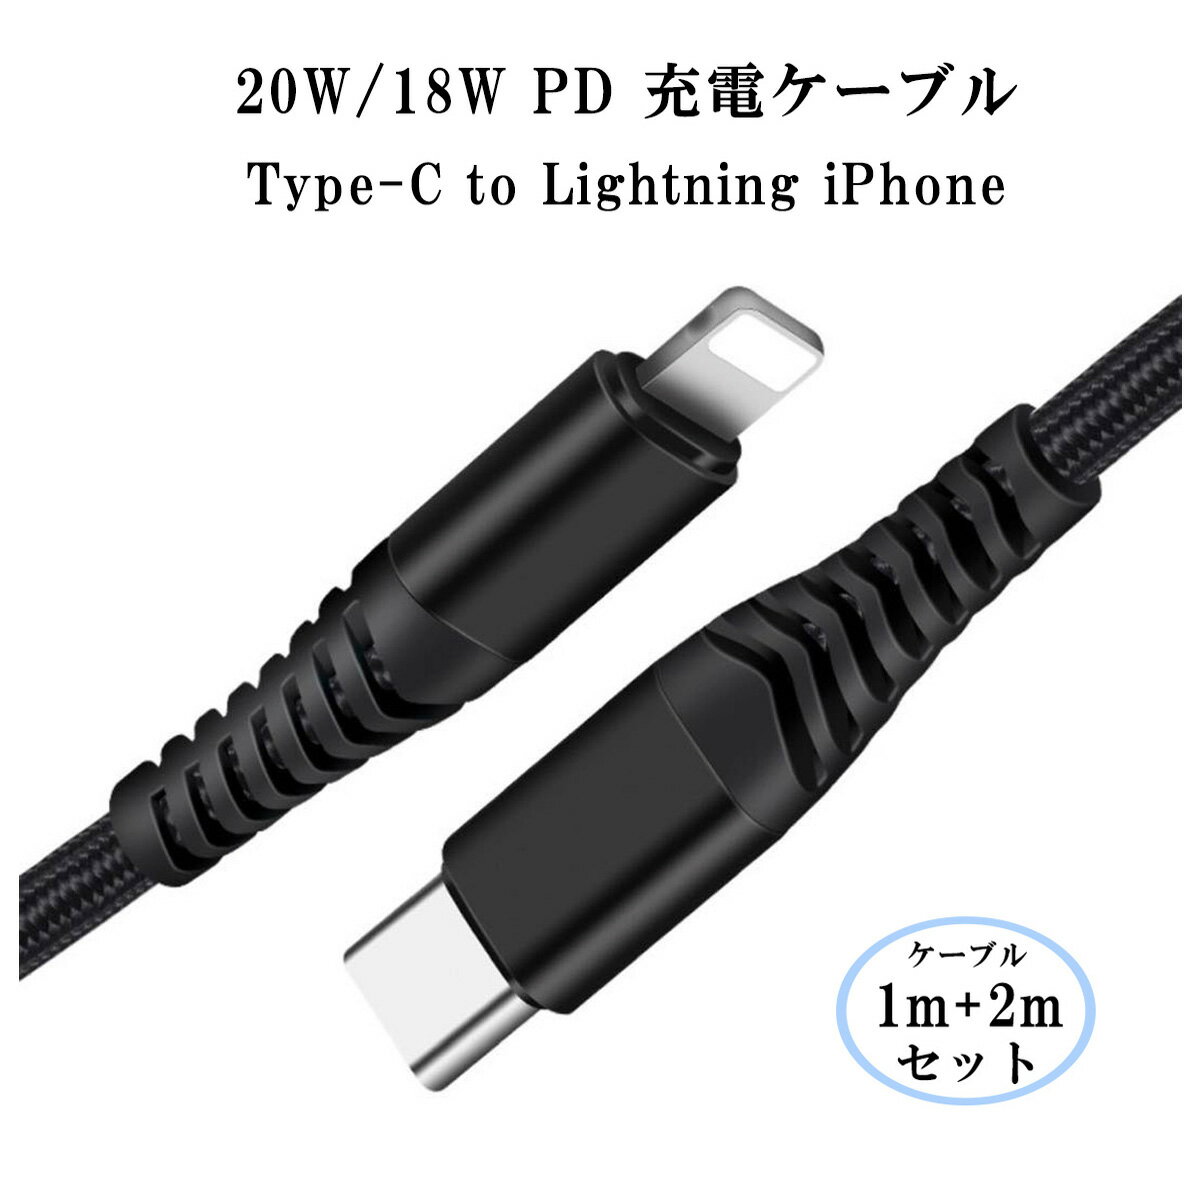 【1m 2m】Lightning USB-C 20W/18W PD 急速充電 ケーブル Type C ライトニングケーブル UCB C タイプC iPhone12/12Pro/12ProMAX iPhone XS/XR/X iPhone11/11Pro iPad Pro 高耐久 ナイロン編み ケーブル